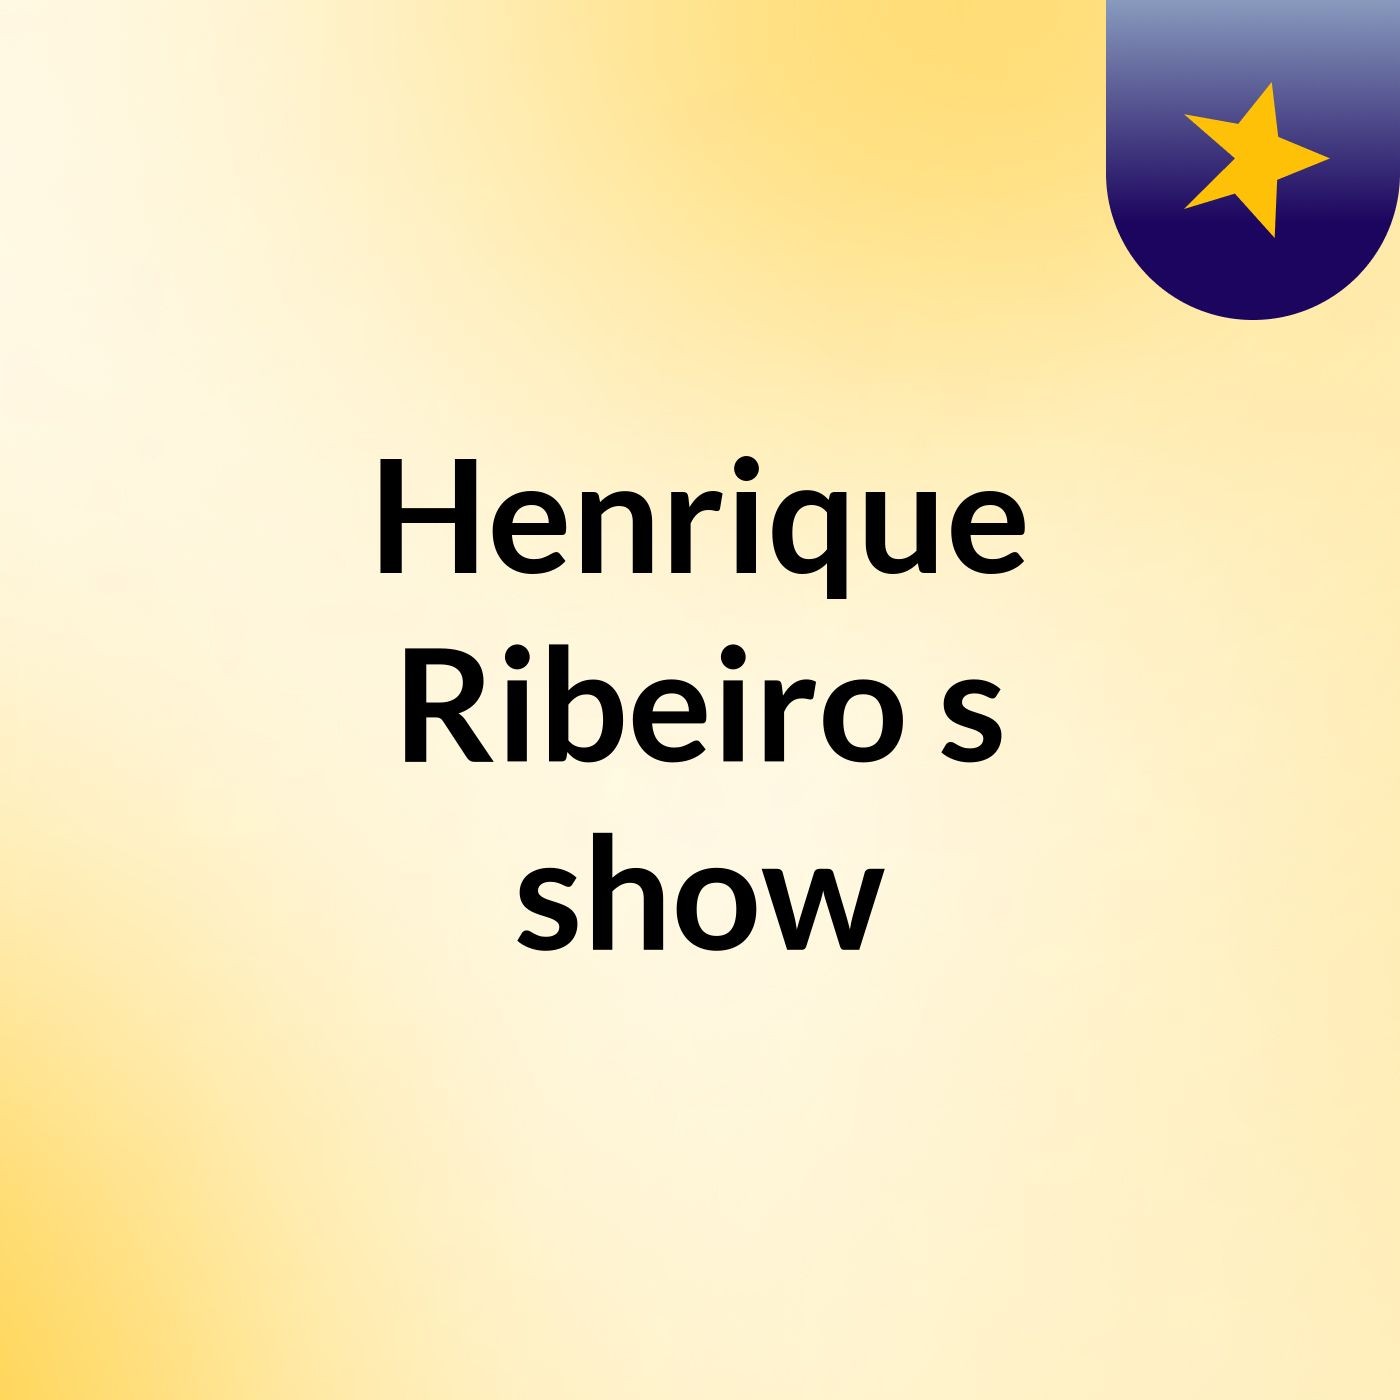 Henrique Ribeiro's show